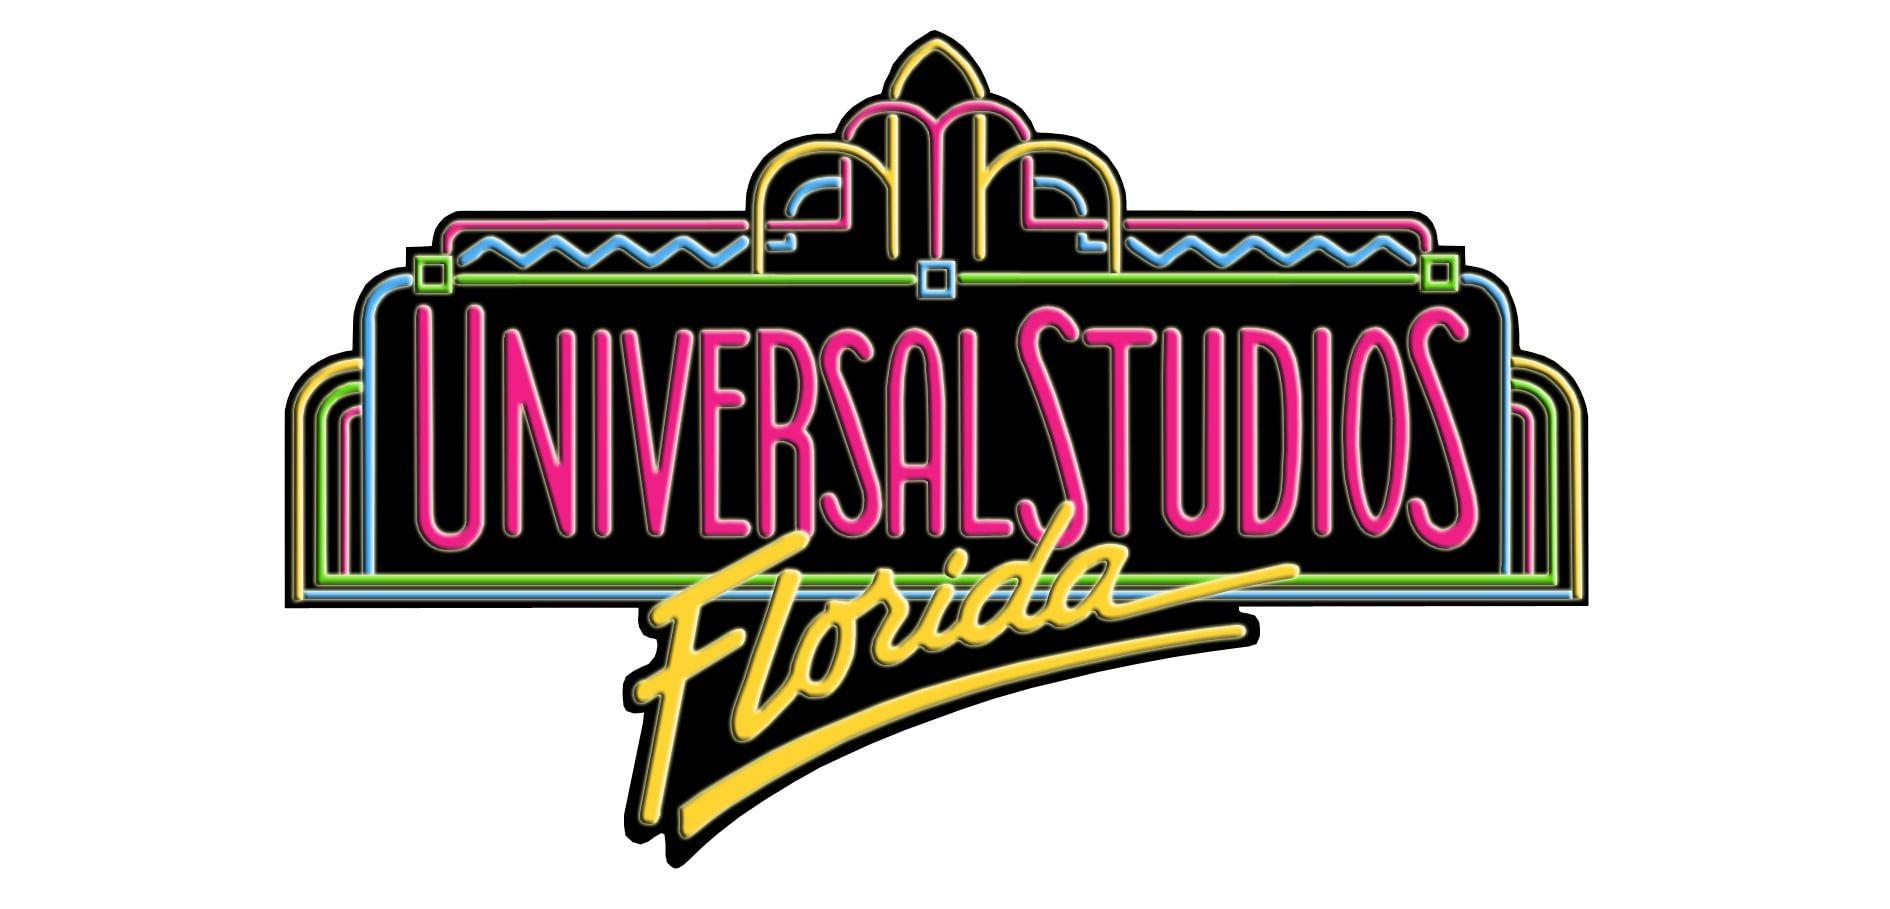 Universal Studios Florida Logo - Universal Studios Florida 25th Anniversary - Scene 3 - June 7, 1990 ...